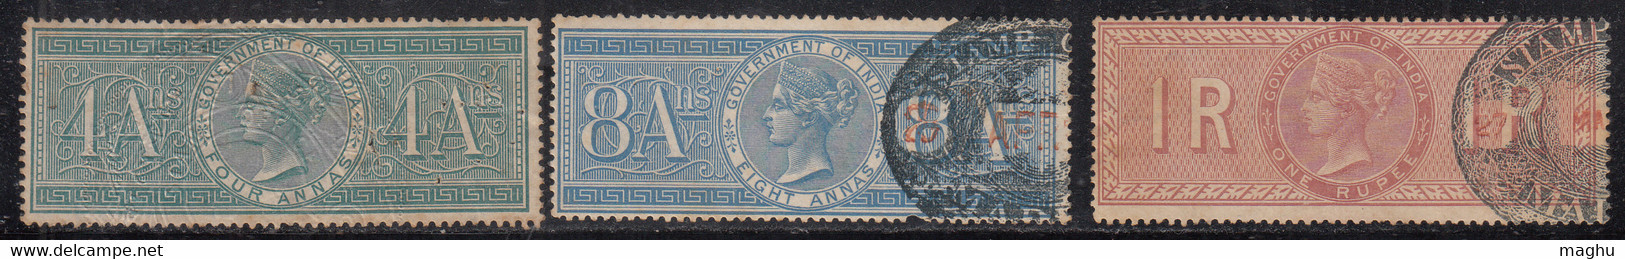 3v British India Used Adhesive Fiscal / Revenue, Queen Victoria, QV Sereis - 1882-1901 Empire